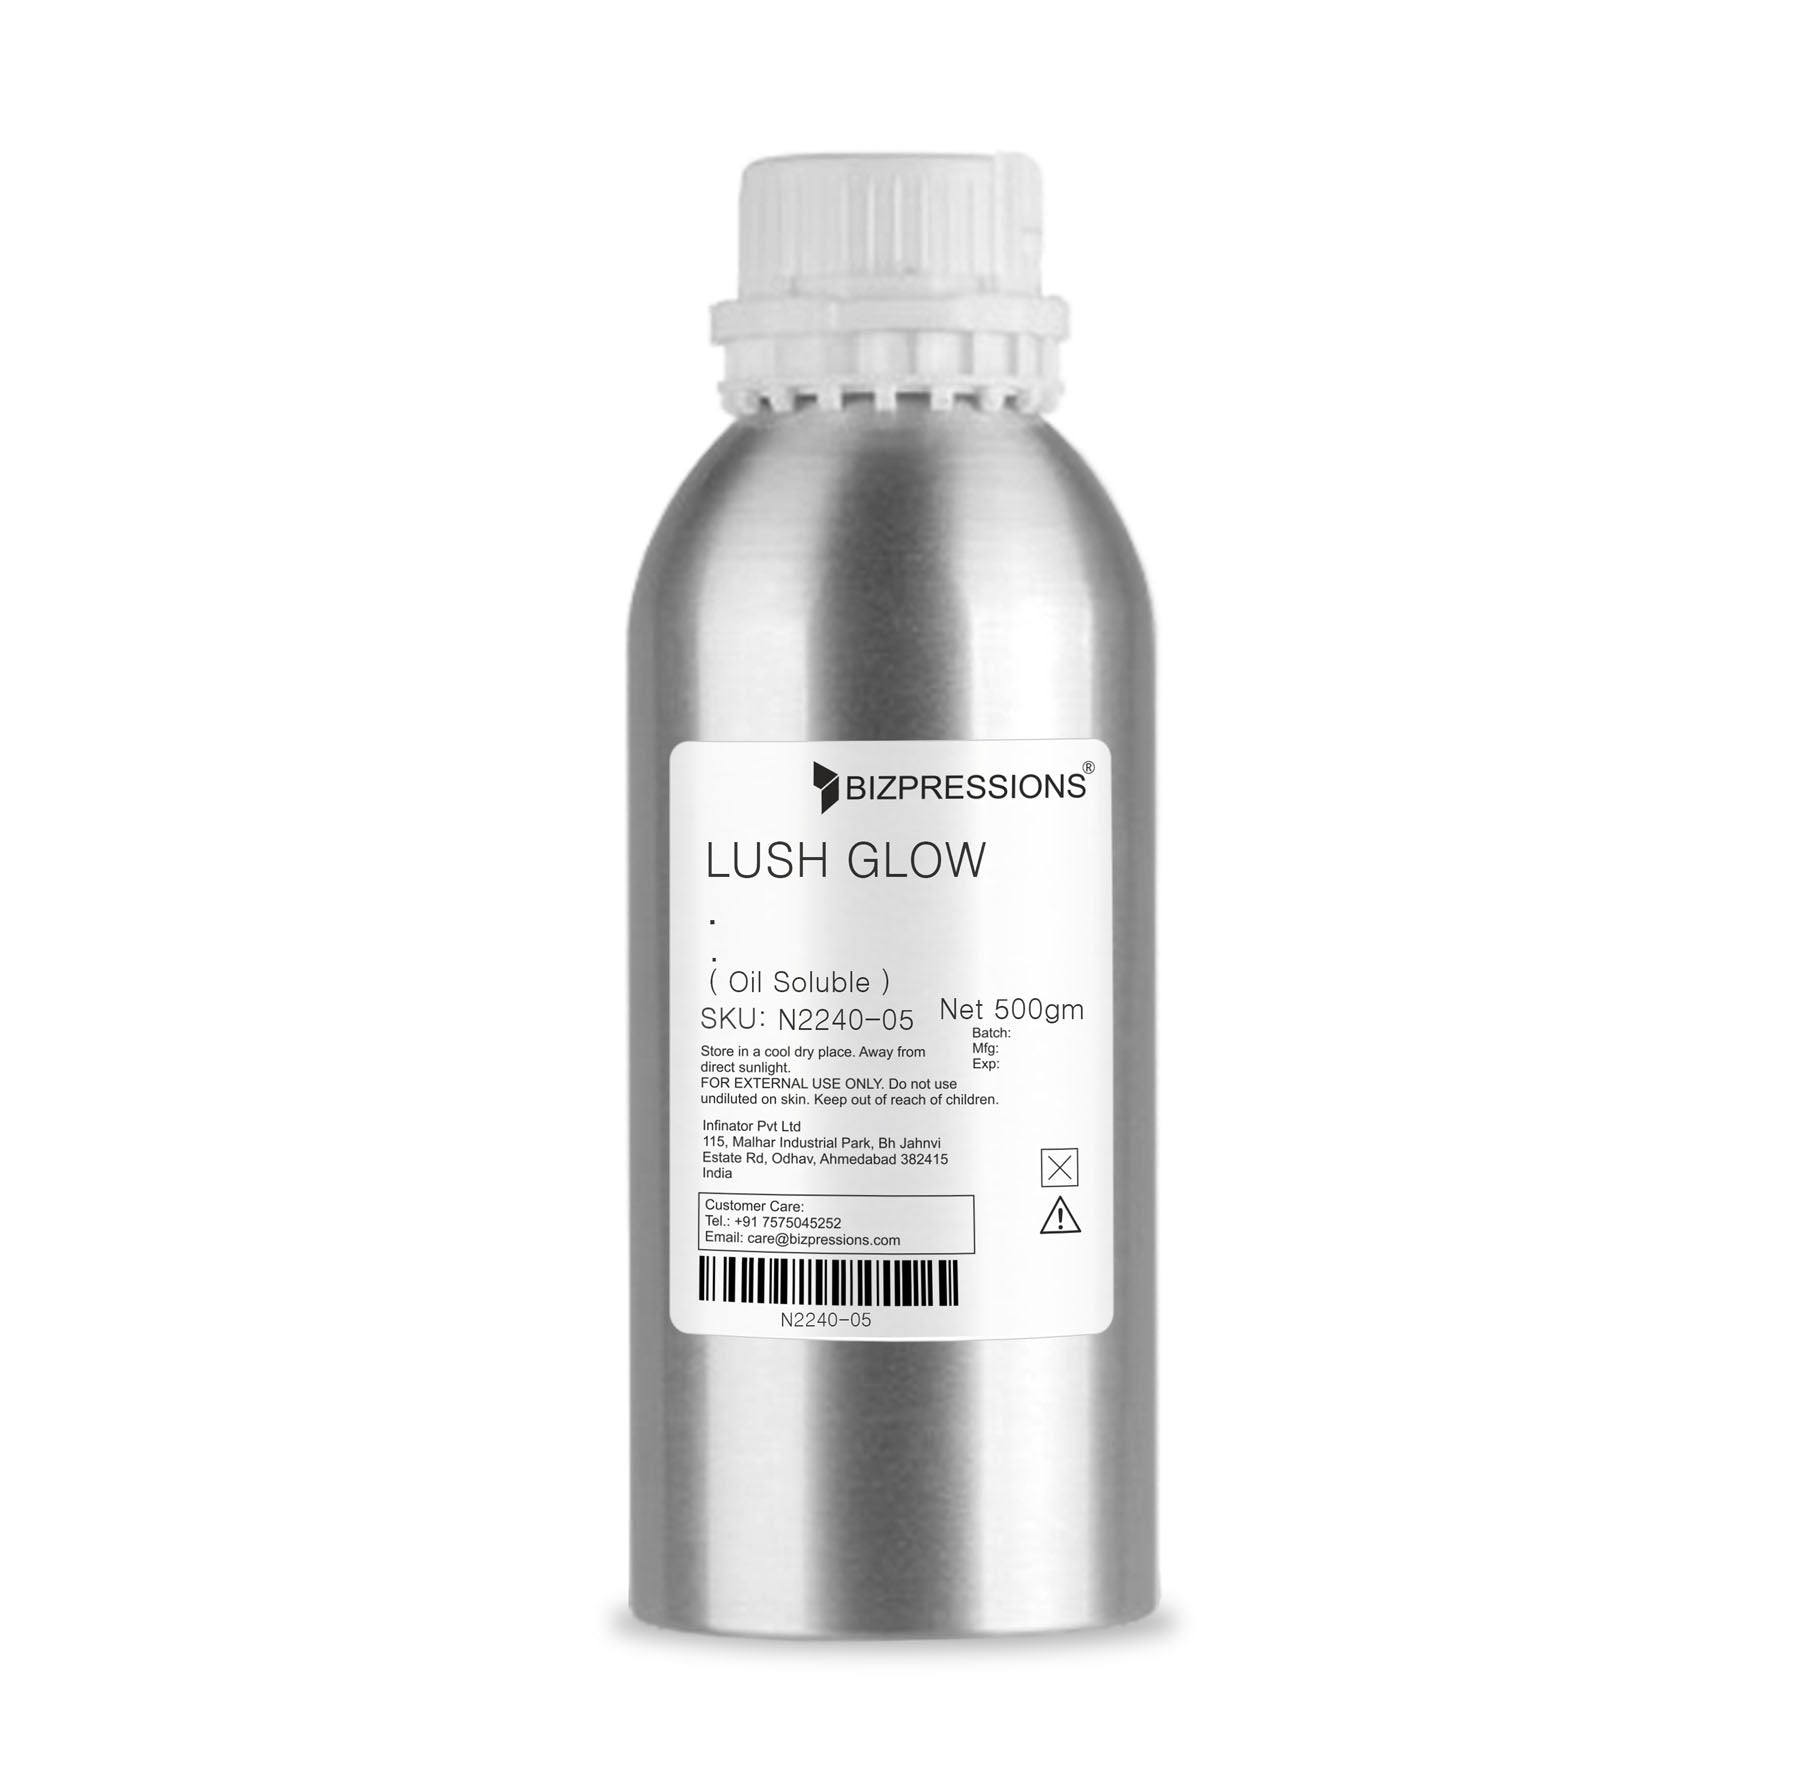 LUSH GLOW - Fragrance ( Oil Soluble ) - 500 gm